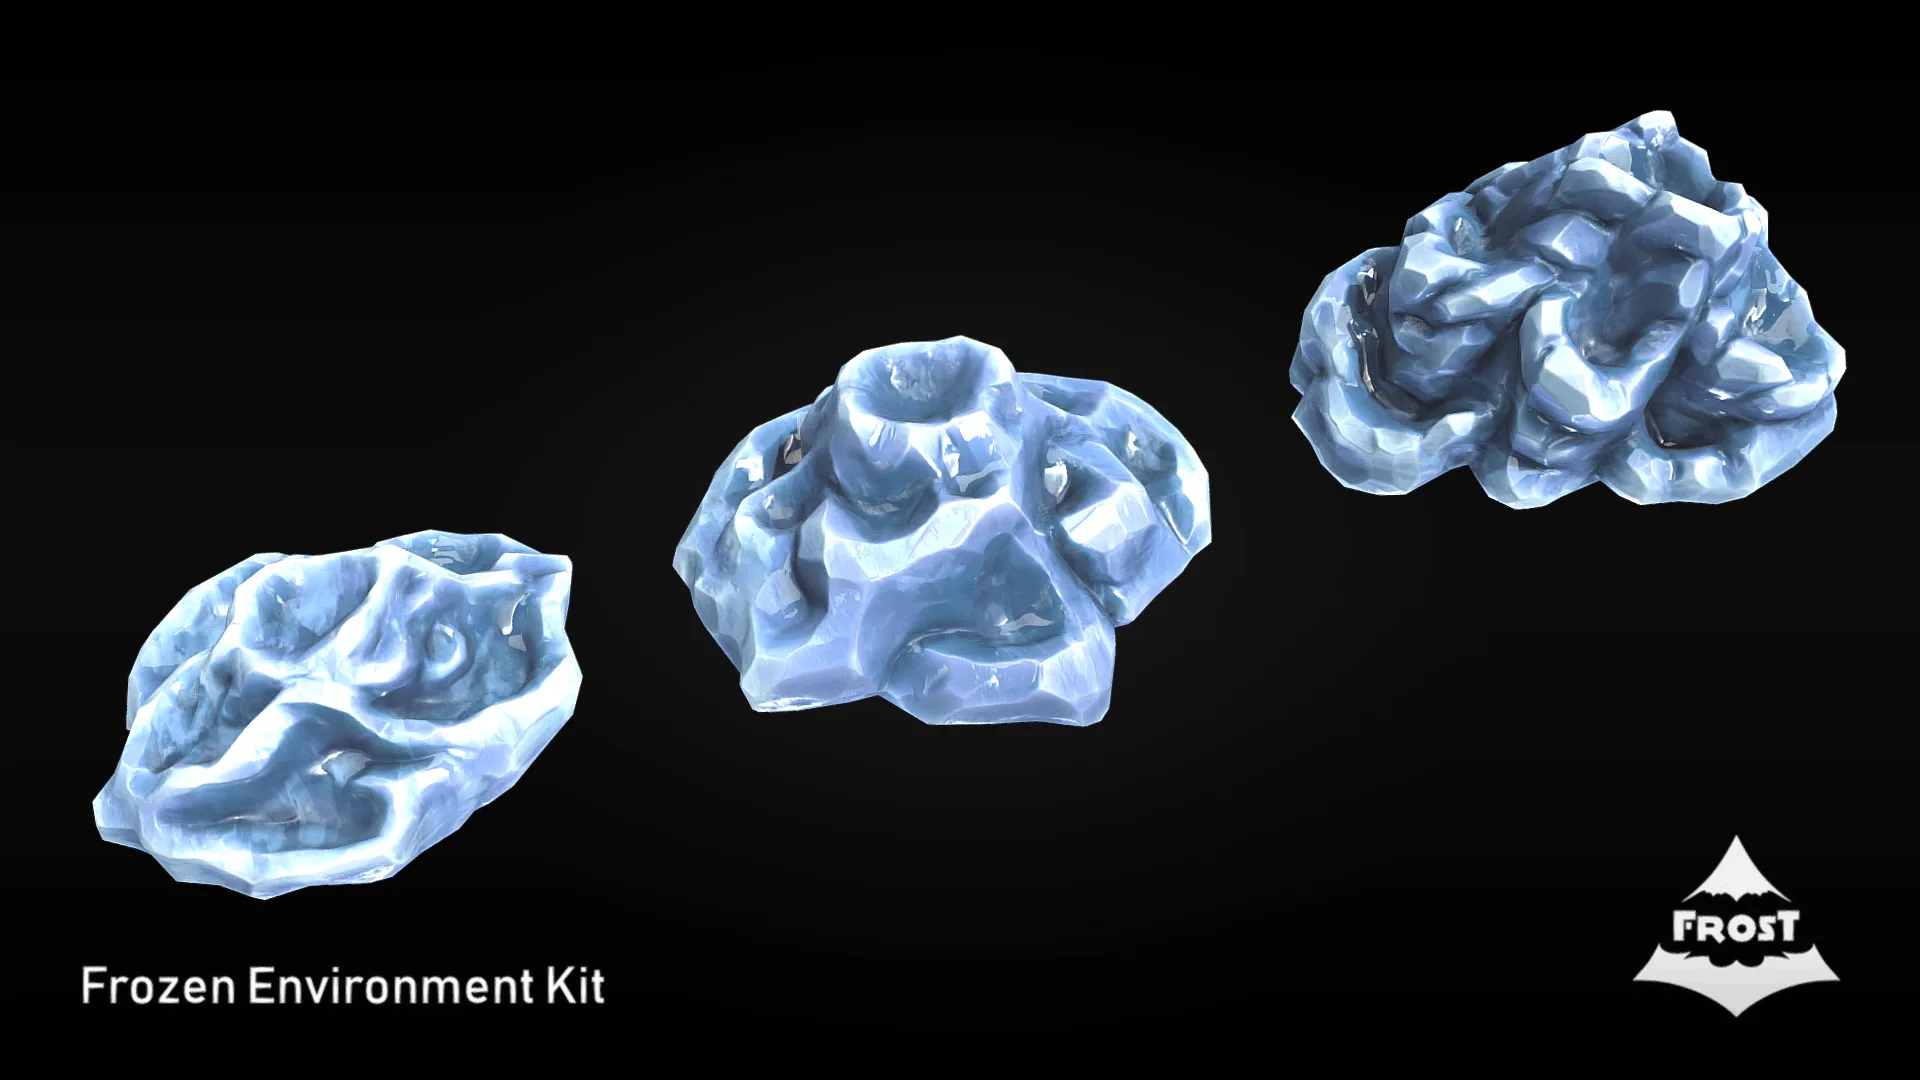 FROST - Frozen Environment Kit